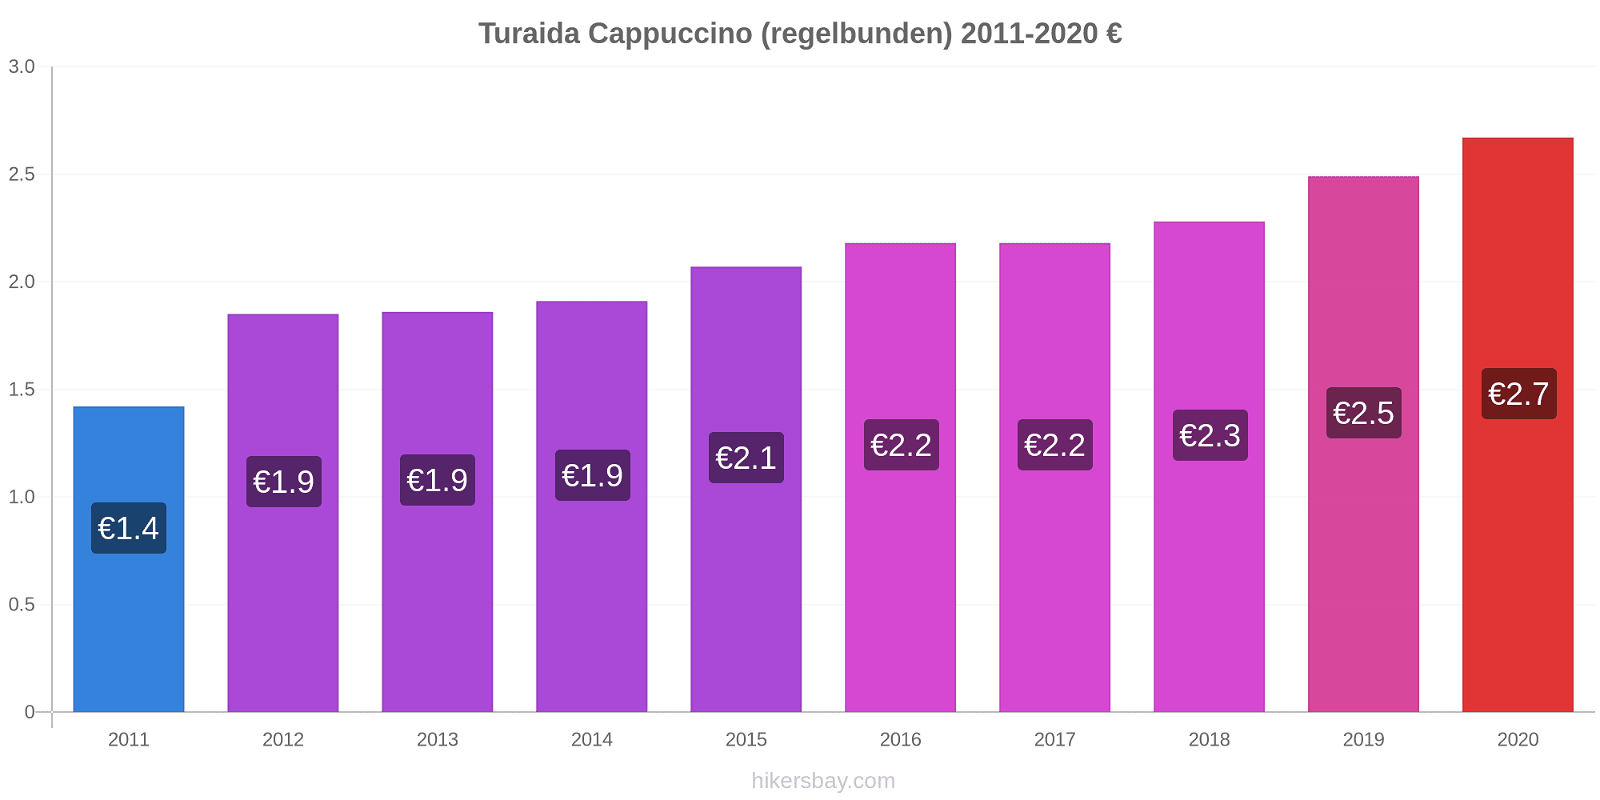 Turaida prisförändringar Cappuccino (regelbunden) hikersbay.com